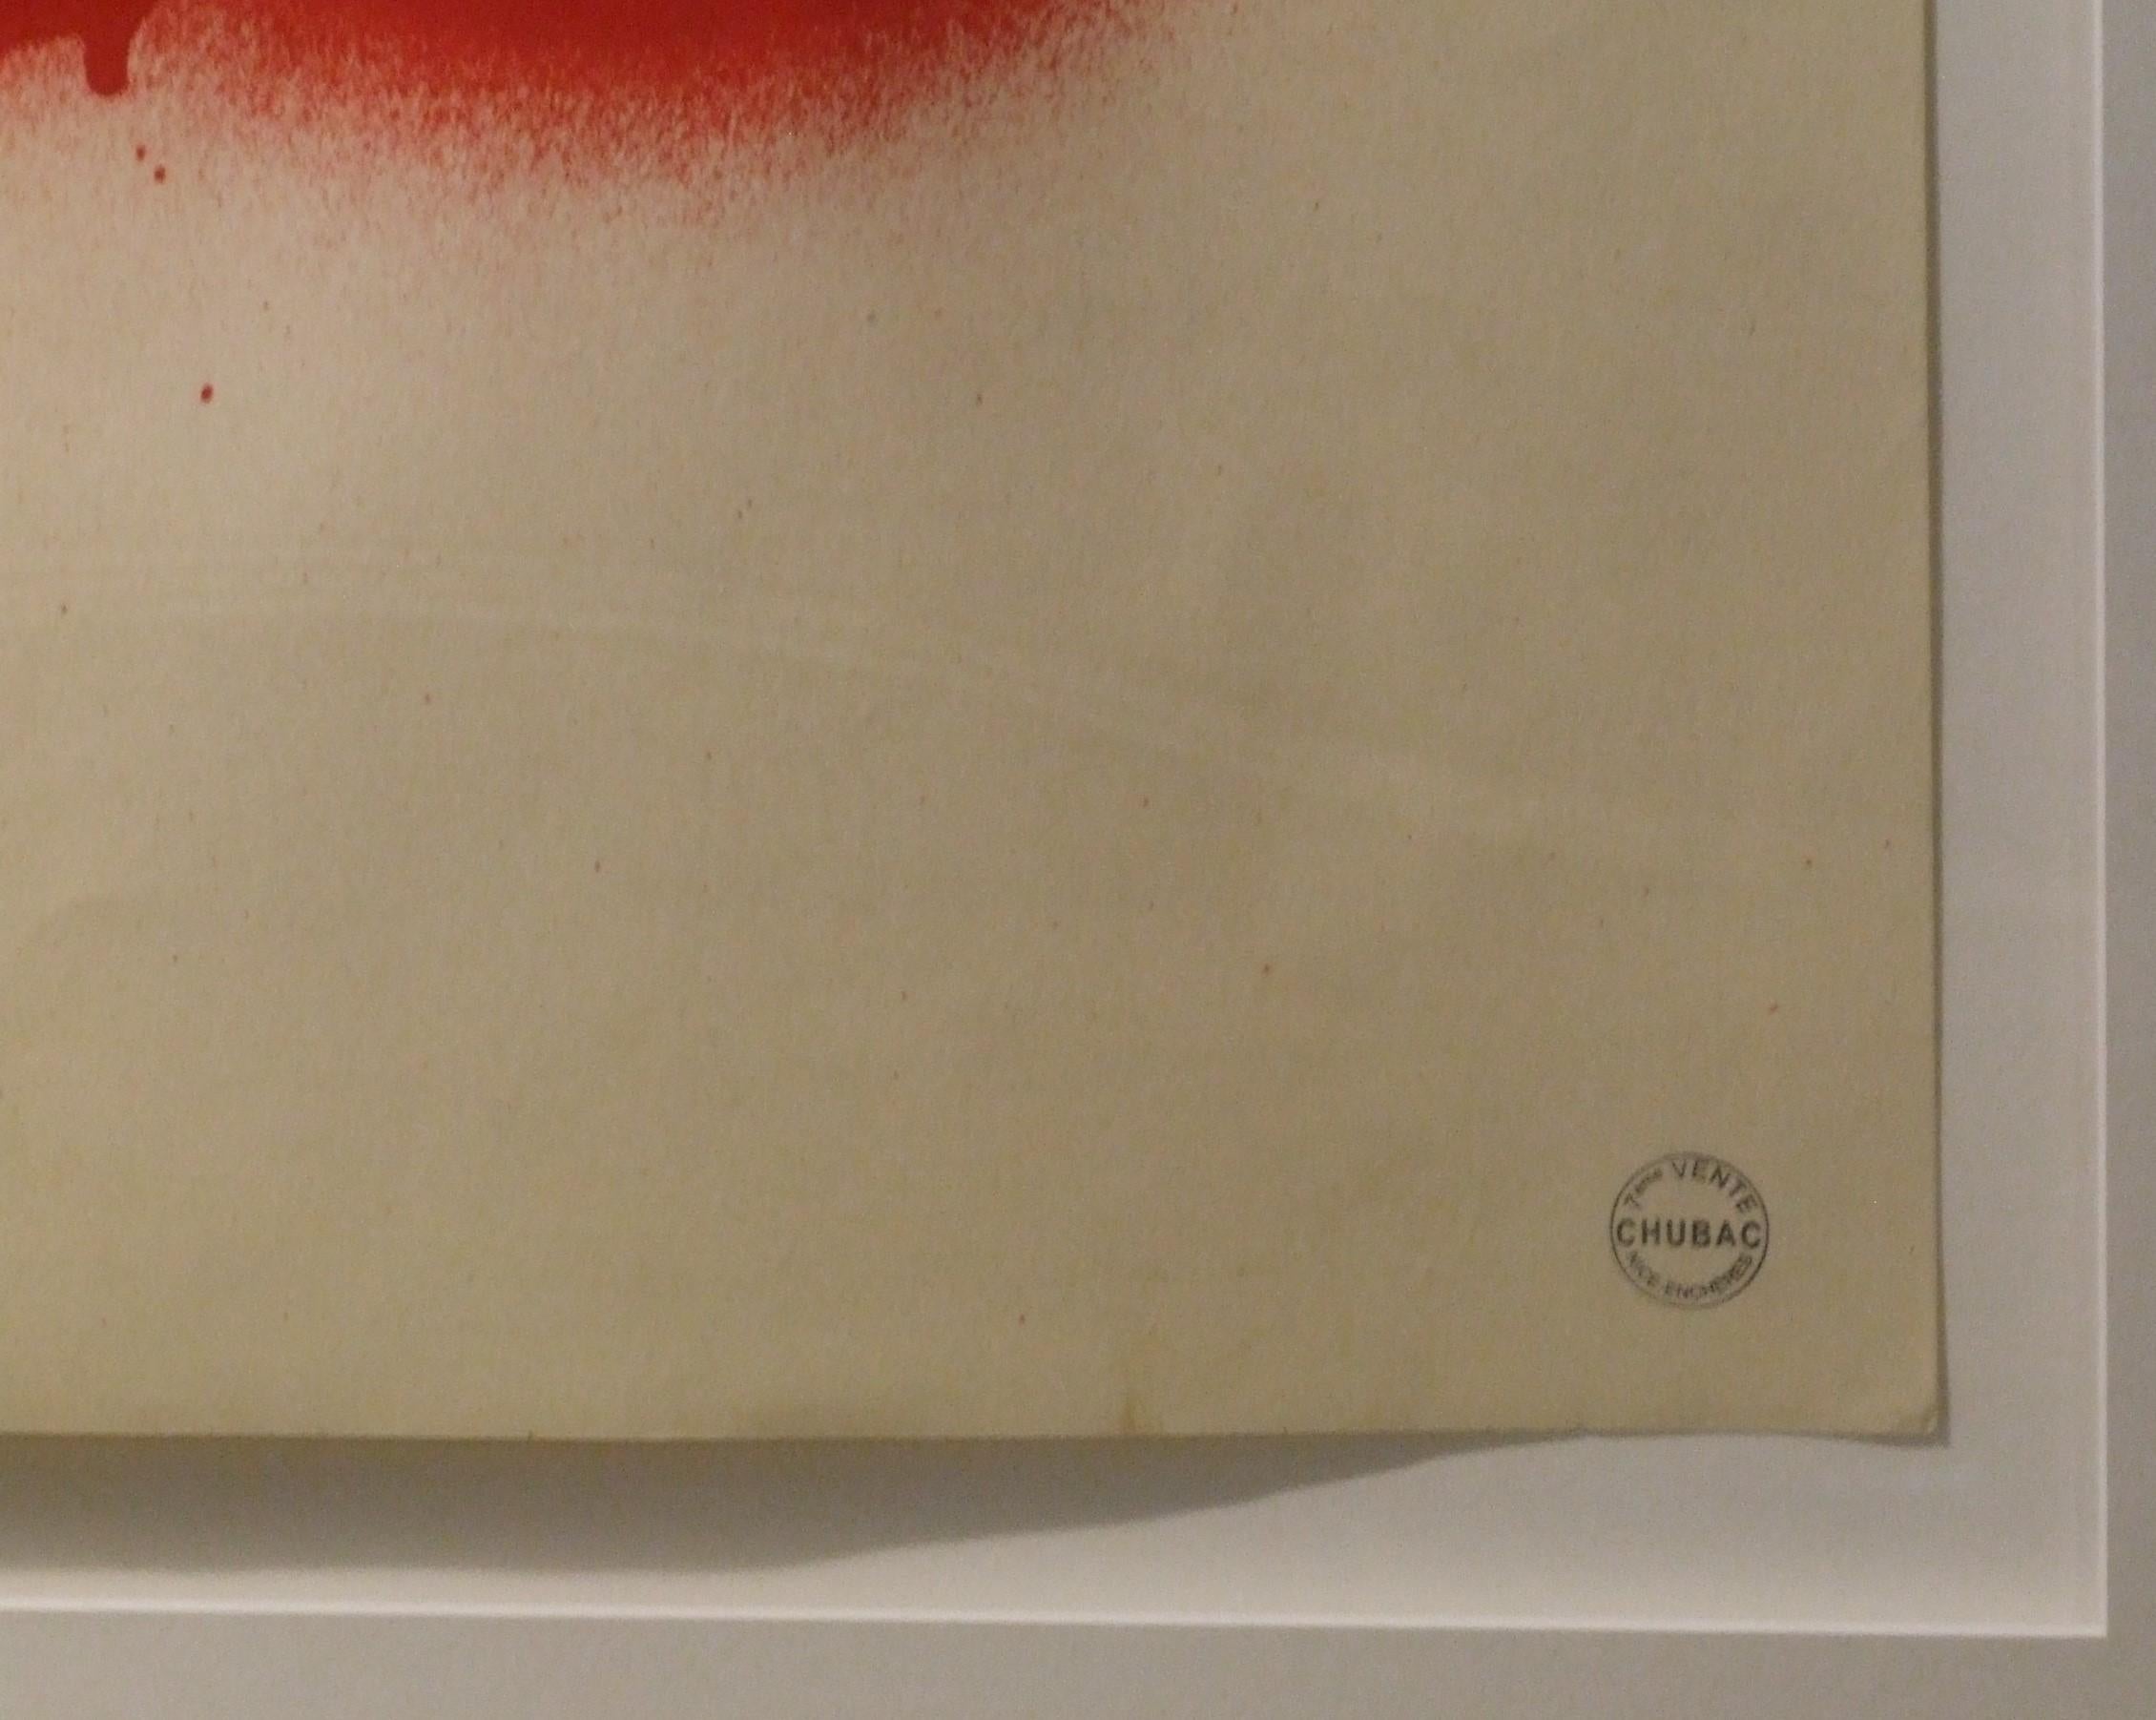 Red spray 2 - spray paint on paper, 43x59 cm., framed - Art by Albert Chubac